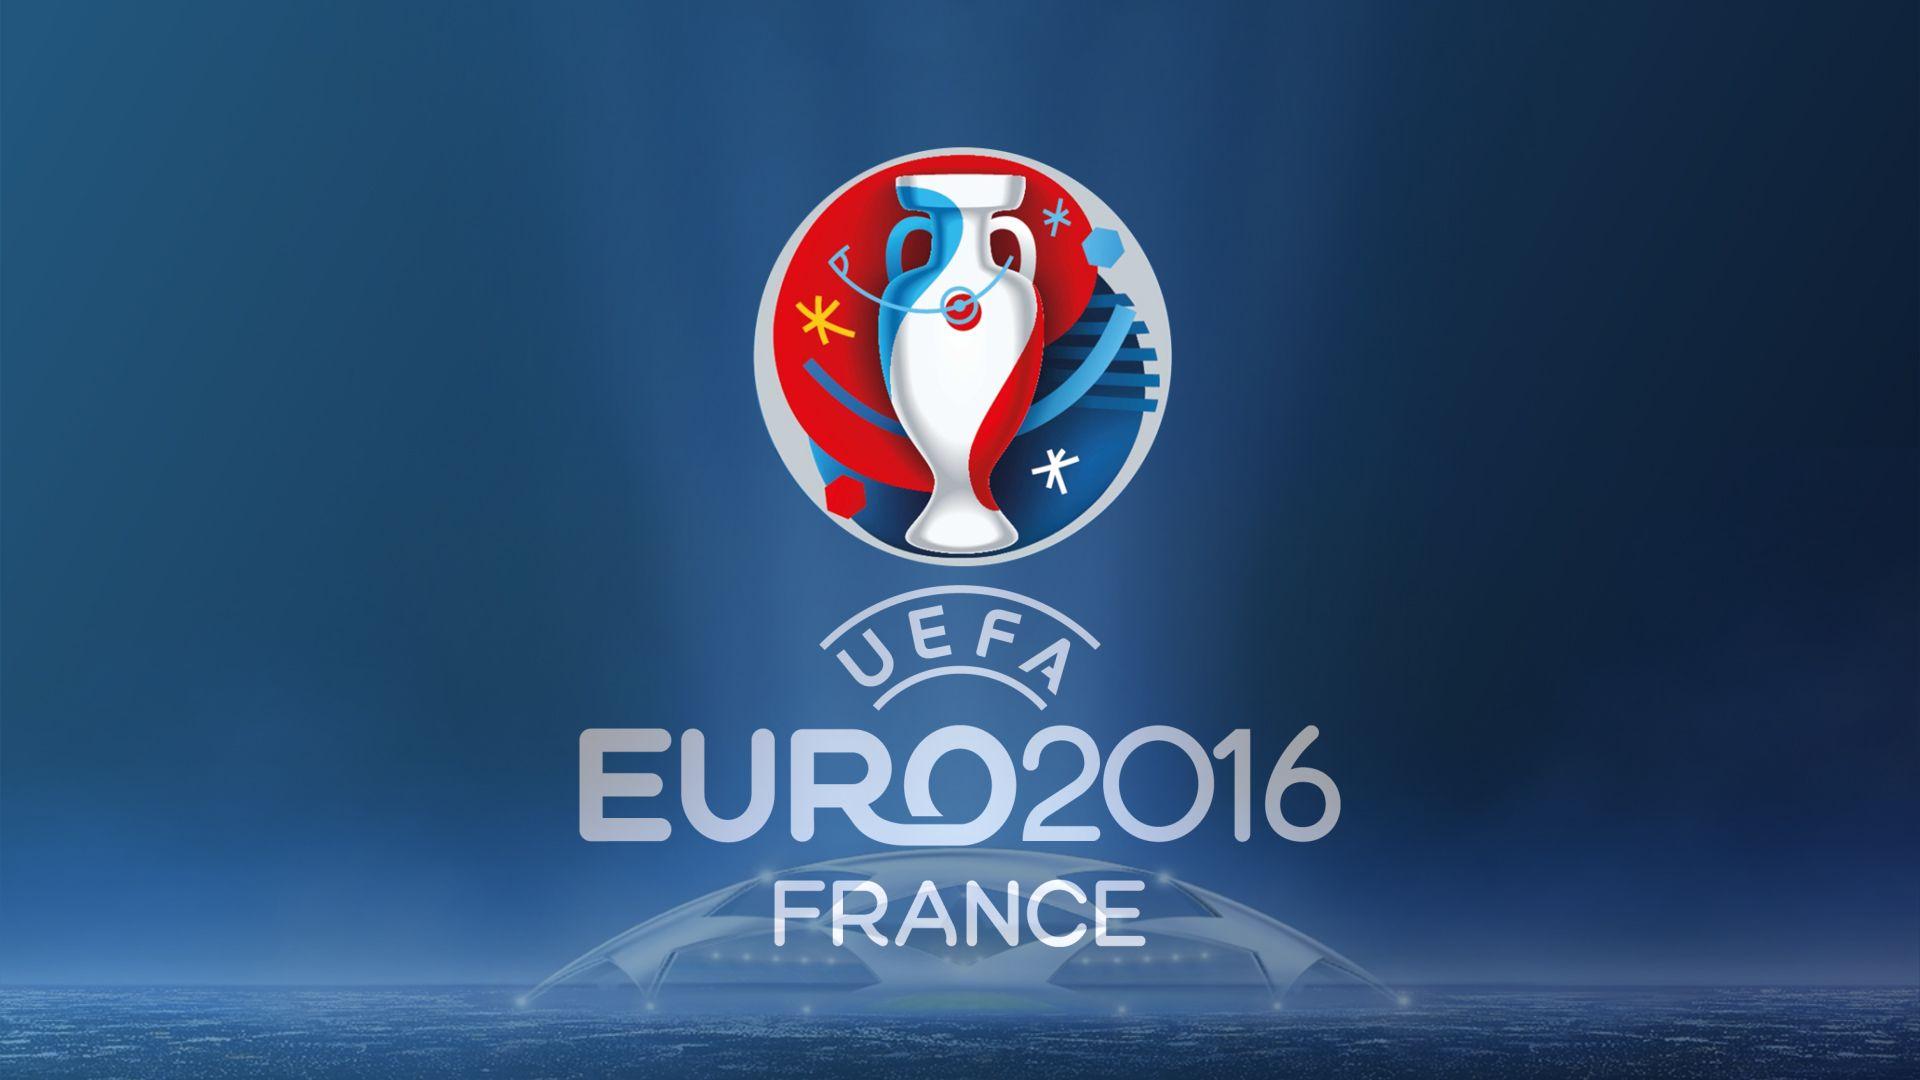 Euro 2016 France wallpaper 2018 in Soccer